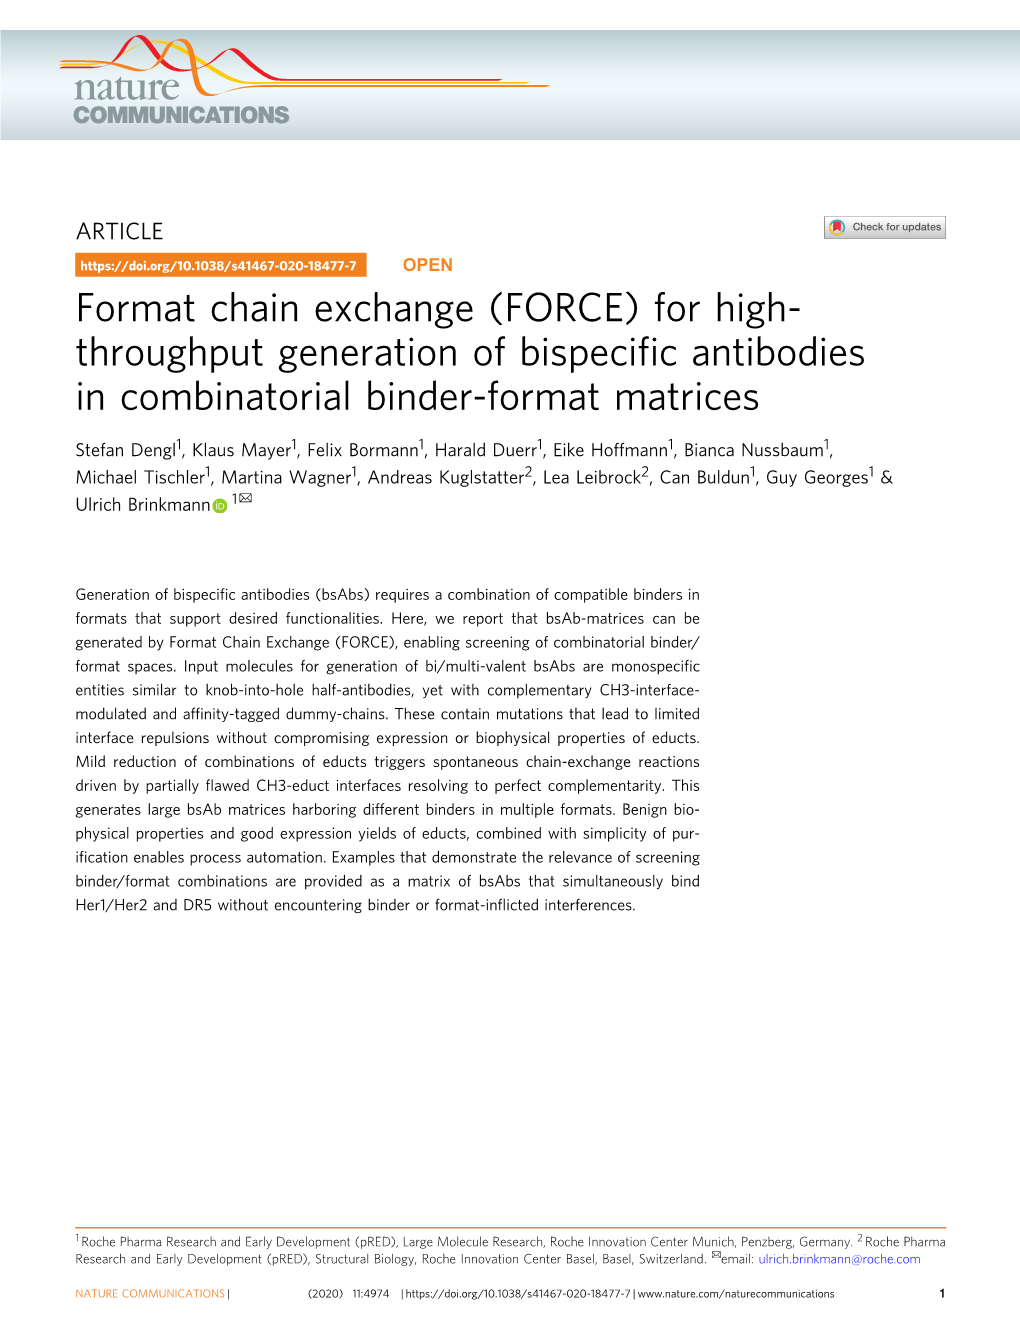 Format Chain Exchange (FORCE) for High- Throughput Generation of Bispeciﬁc Antibodies in Combinatorial Binder-Format Matrices